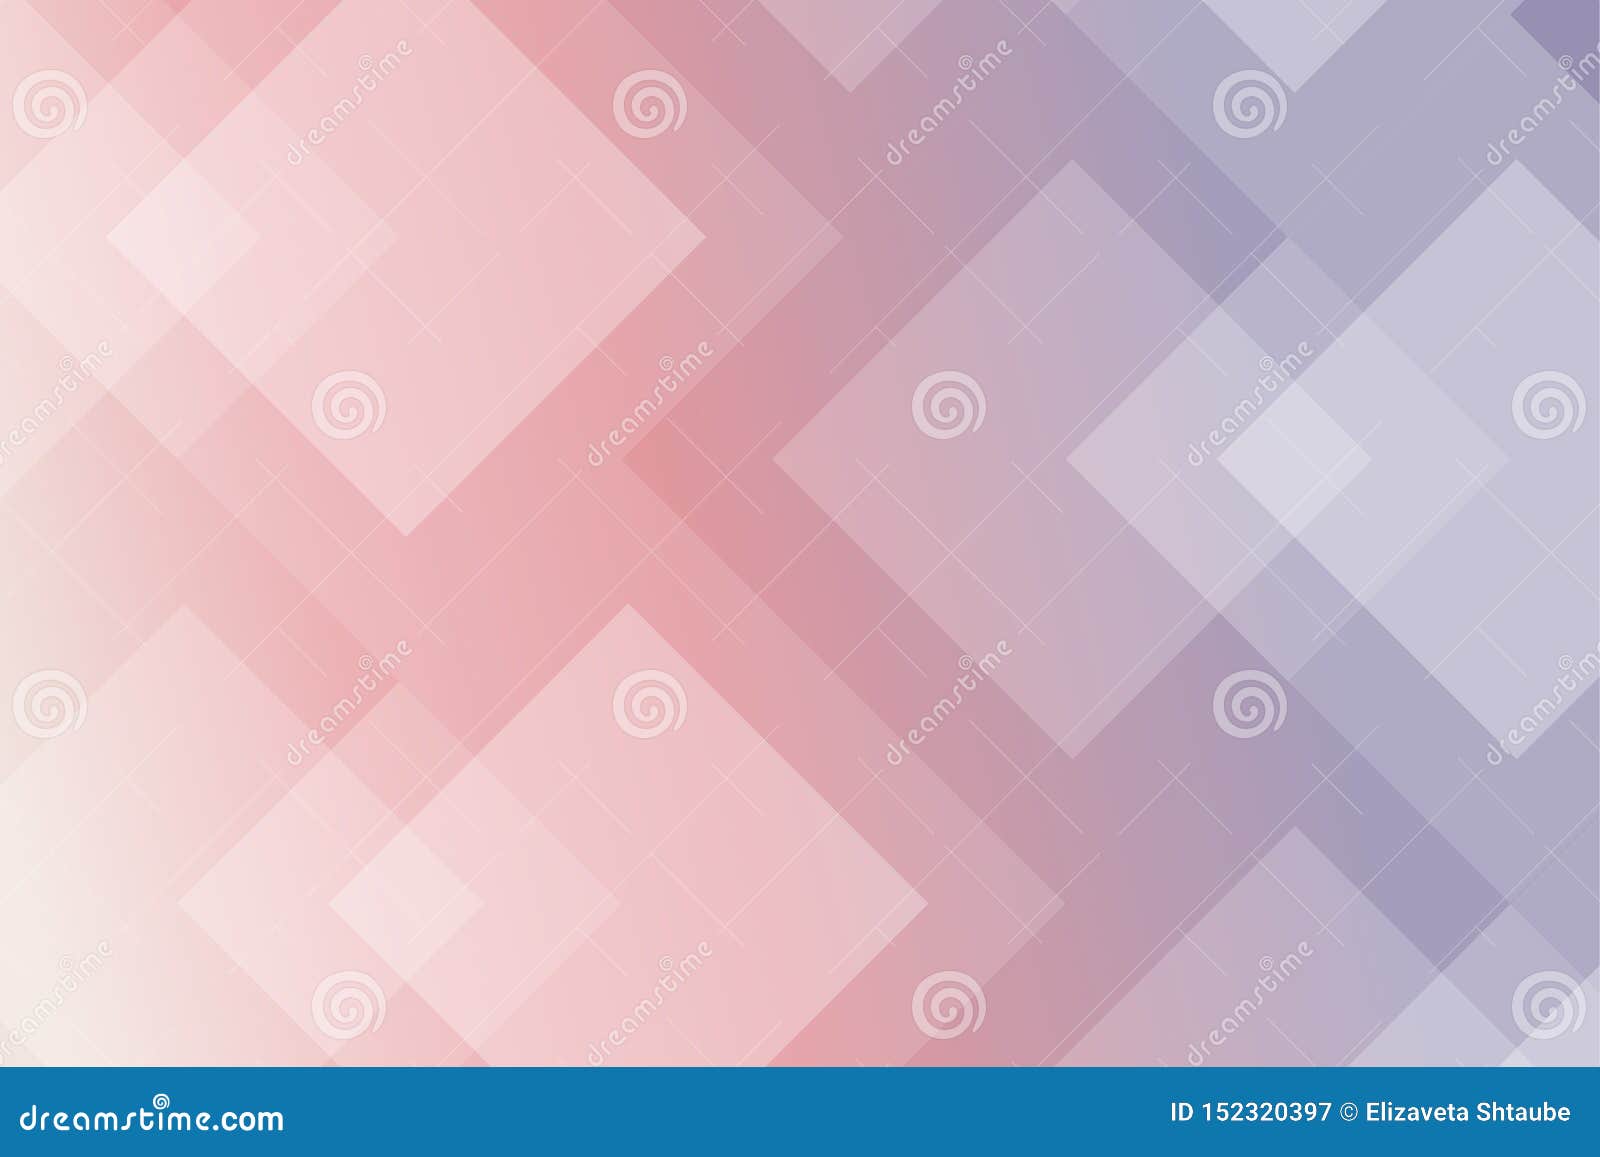 rhombus gradient background. abstract geometric pattern